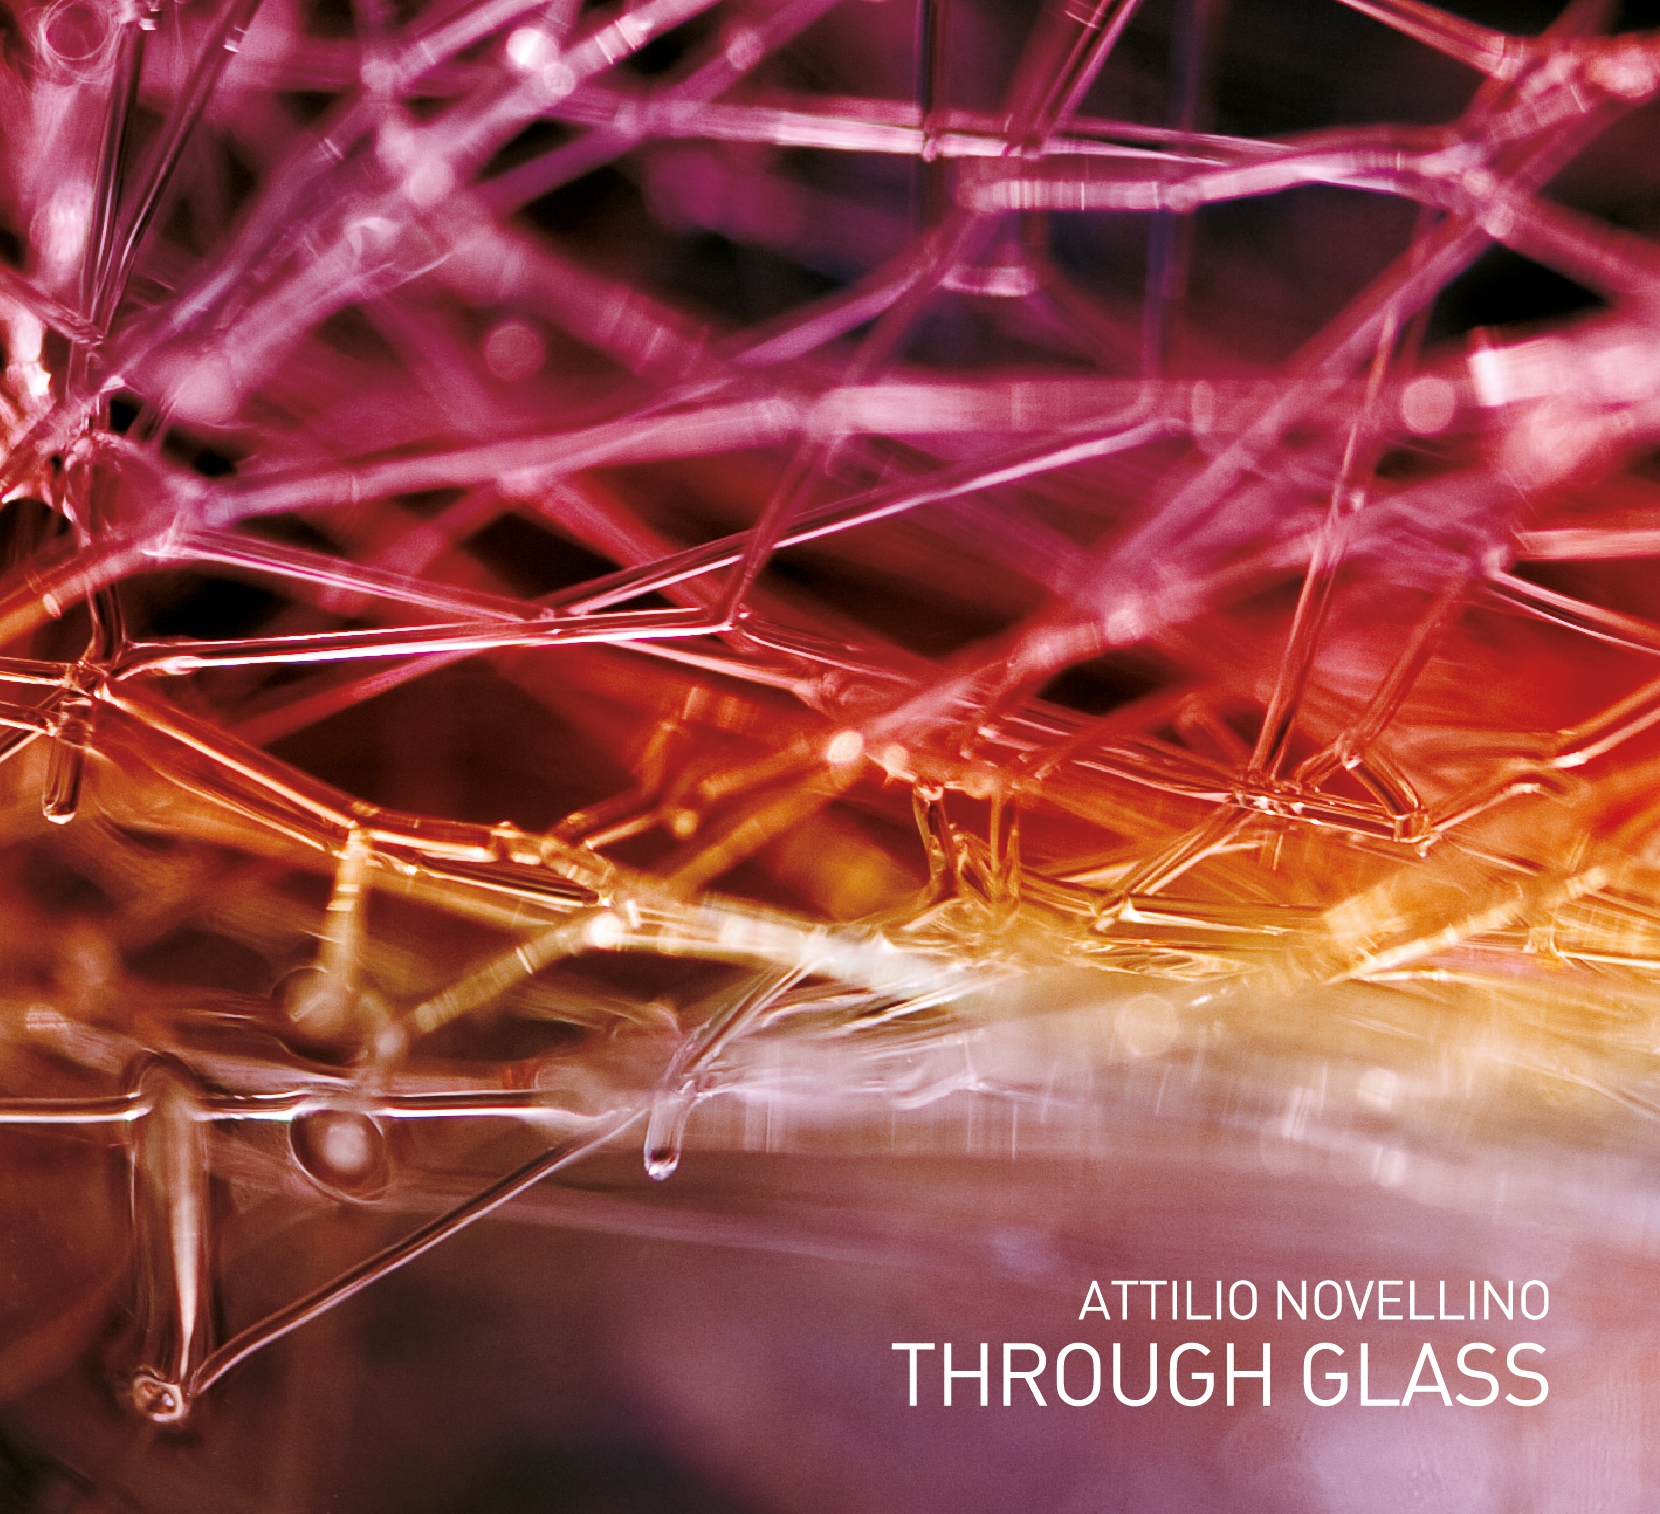 Through glass. Through Glass технология. Through the Glass. Needle through Glass. Am looking at you through the Glass.